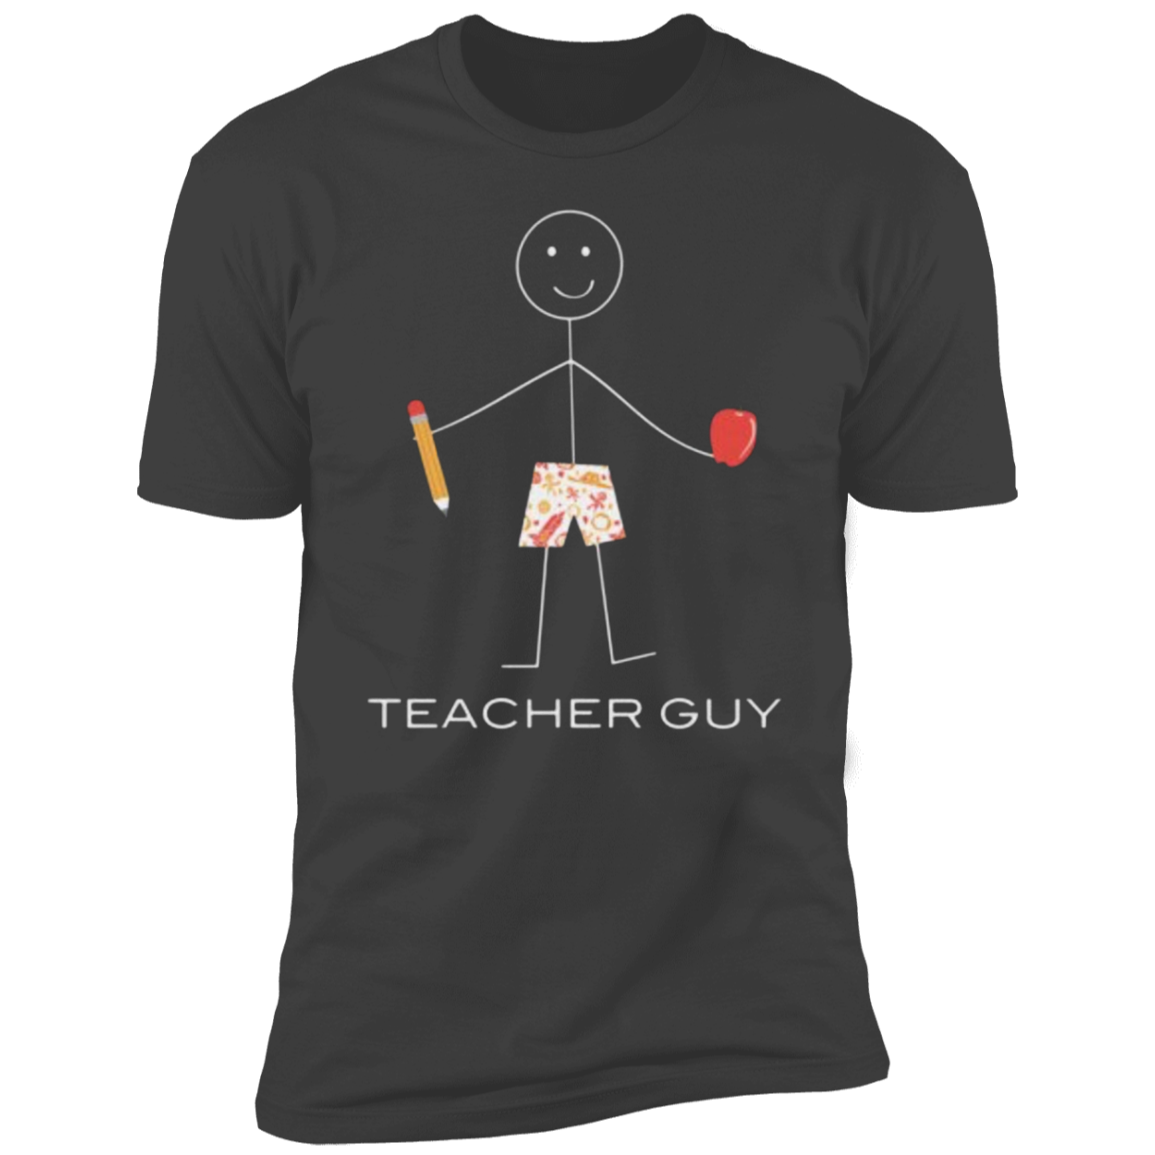 Men's Teacher Guy Tee